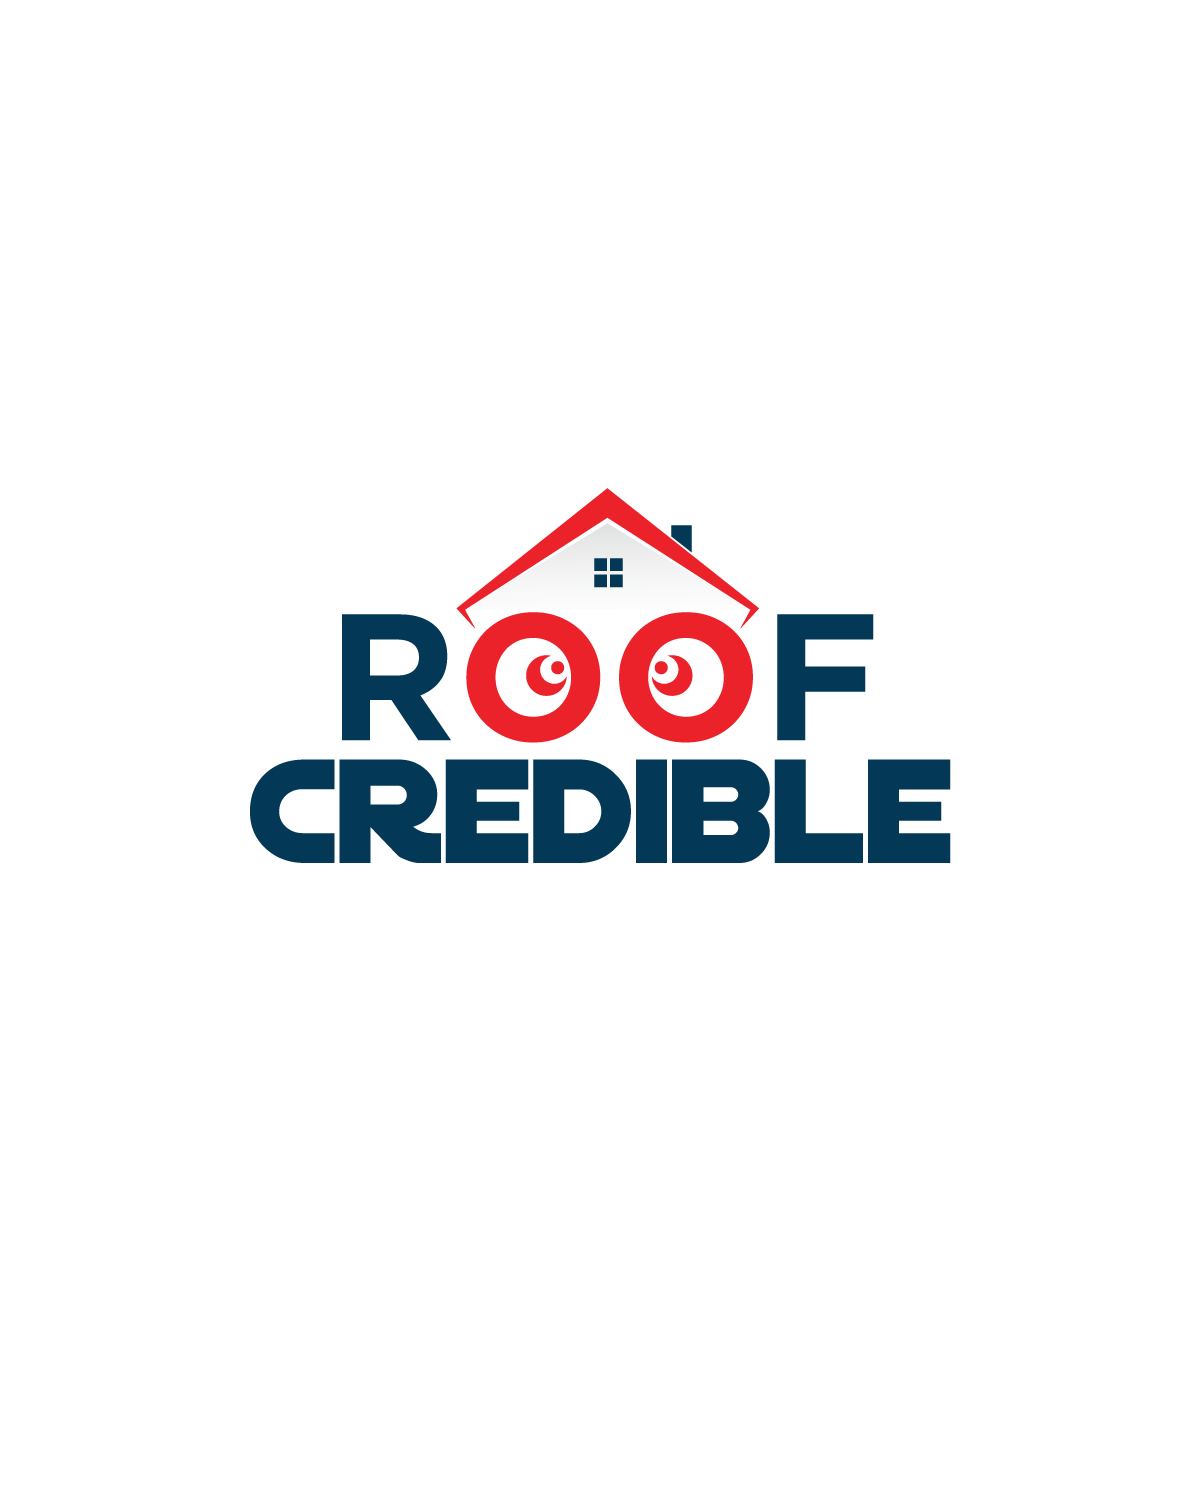 Credible Logo - Serious, Modern Logo Design for Credible Roof by CC design | Design ...